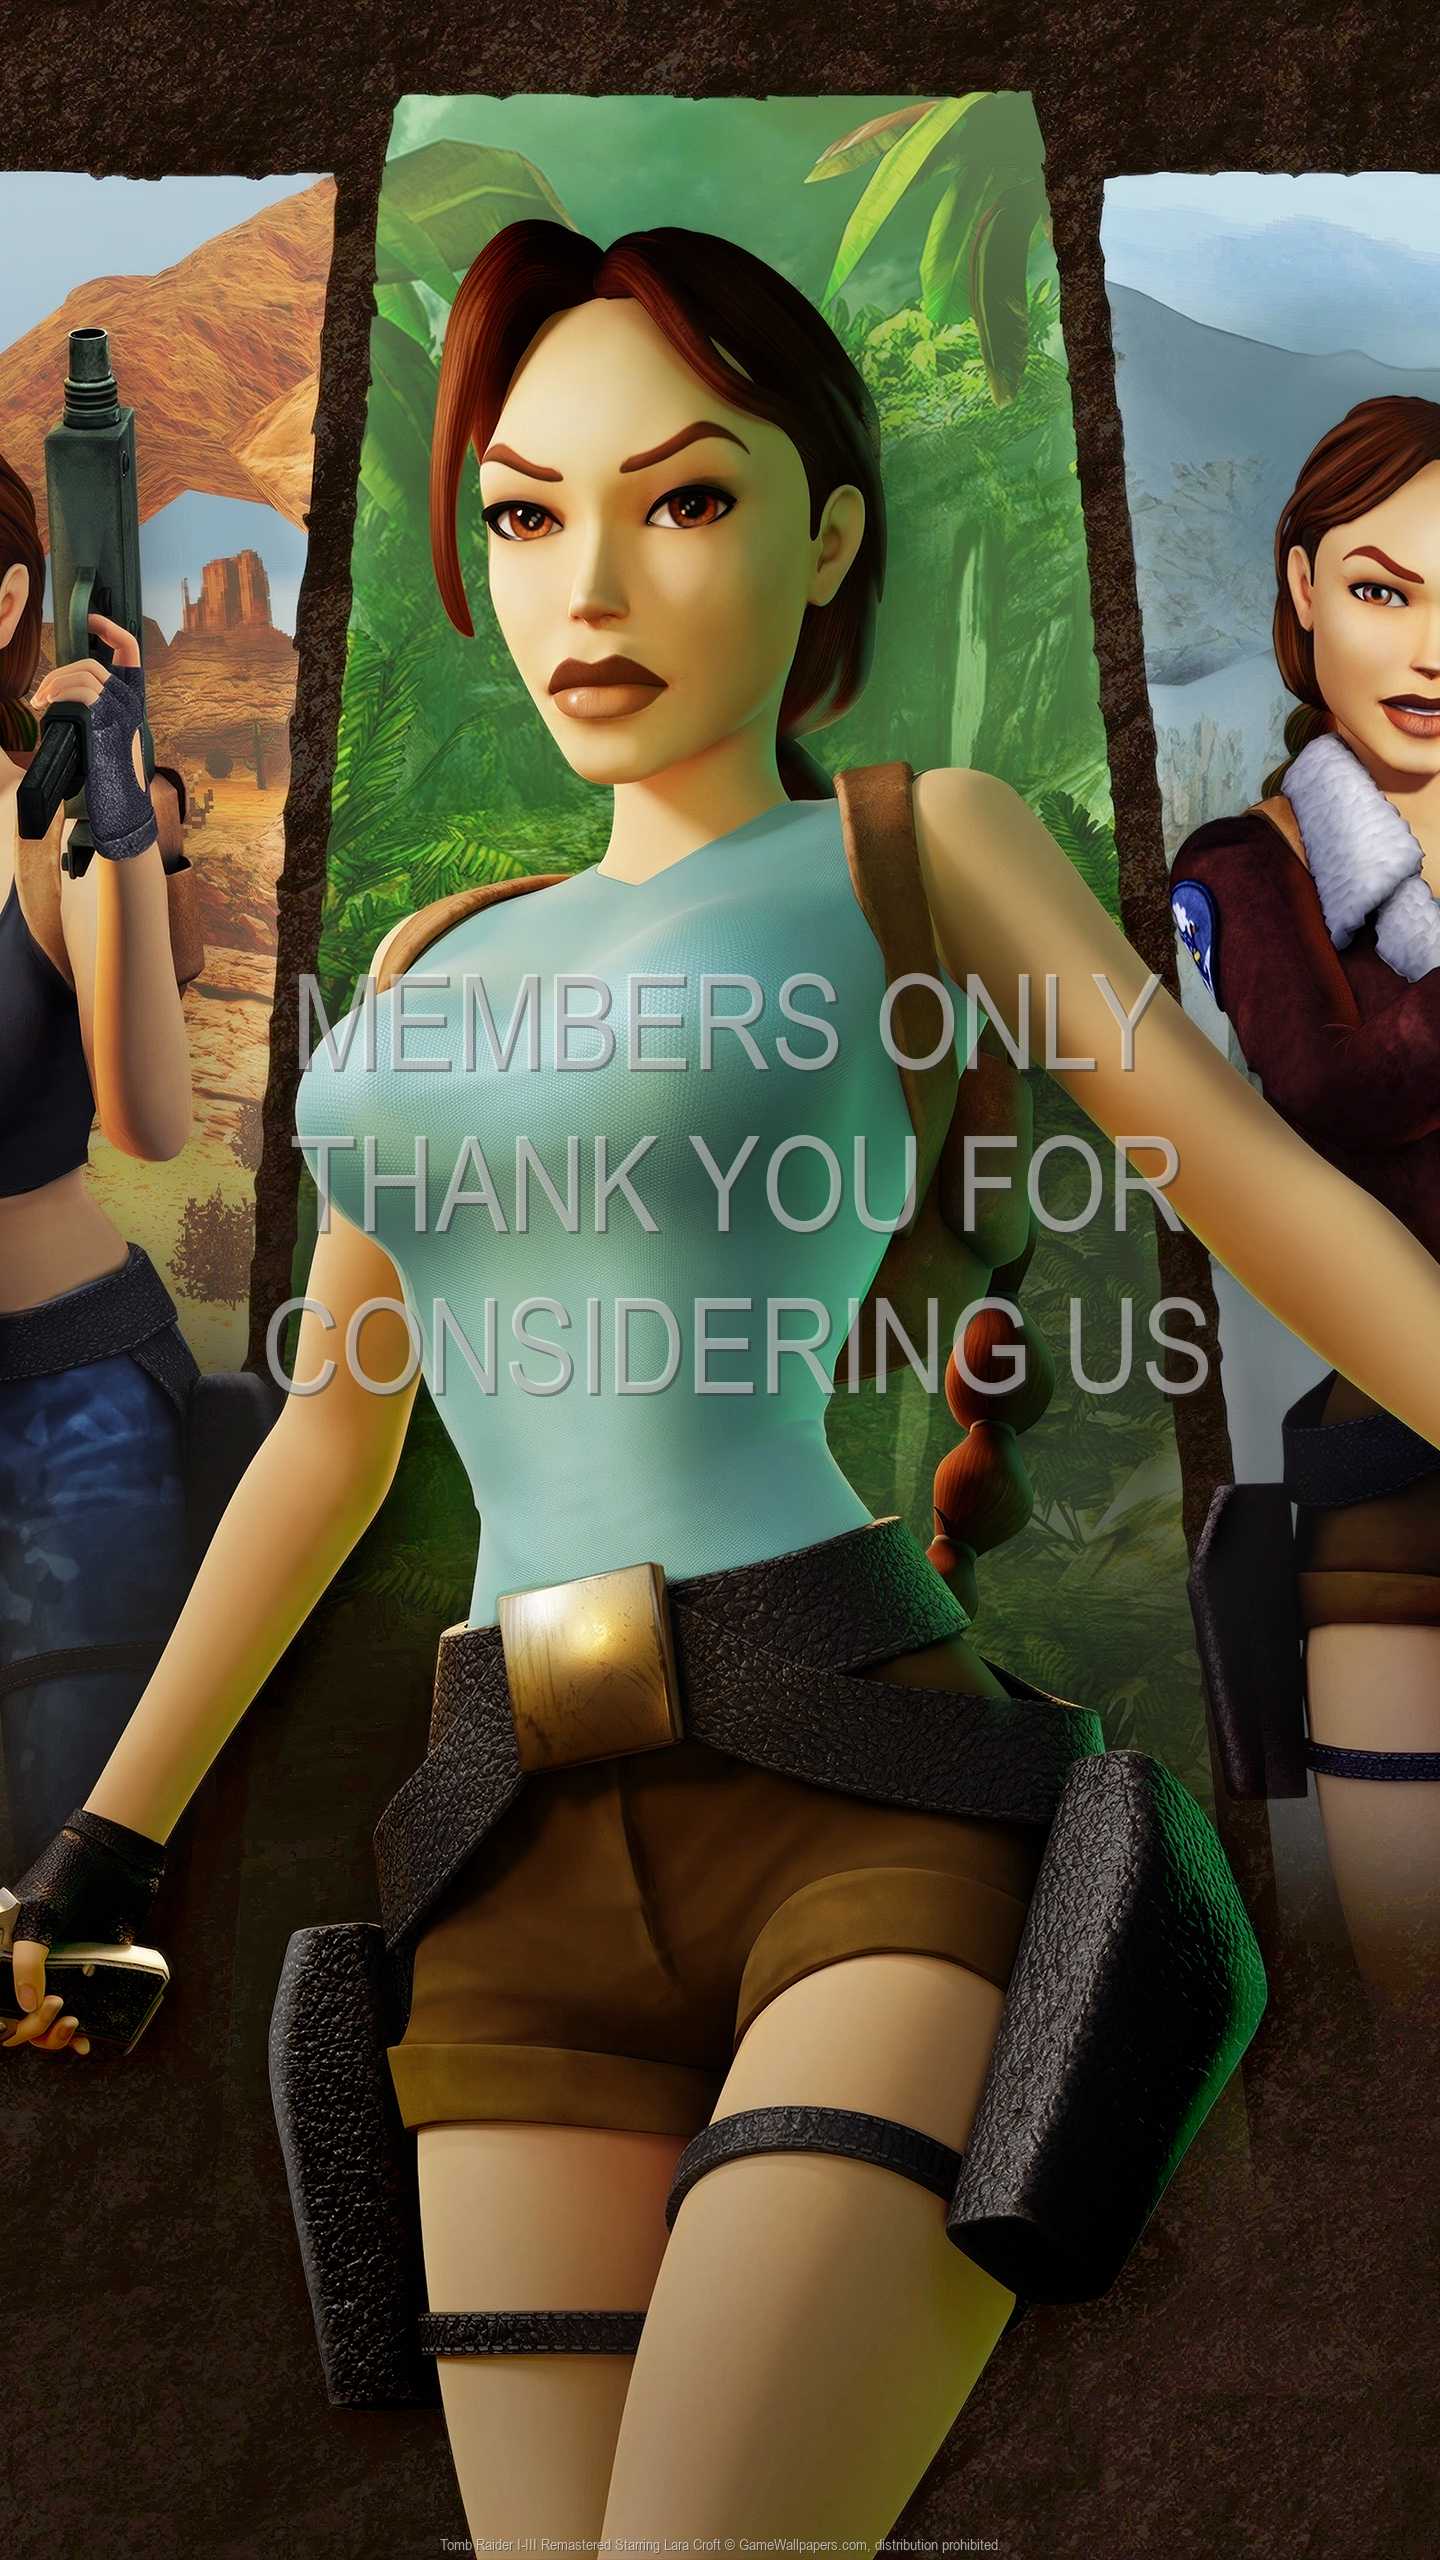 Tomb Raider I-III Remastered Starring Lara Croft 1440p Vertical Mobile wallpaper or background 01